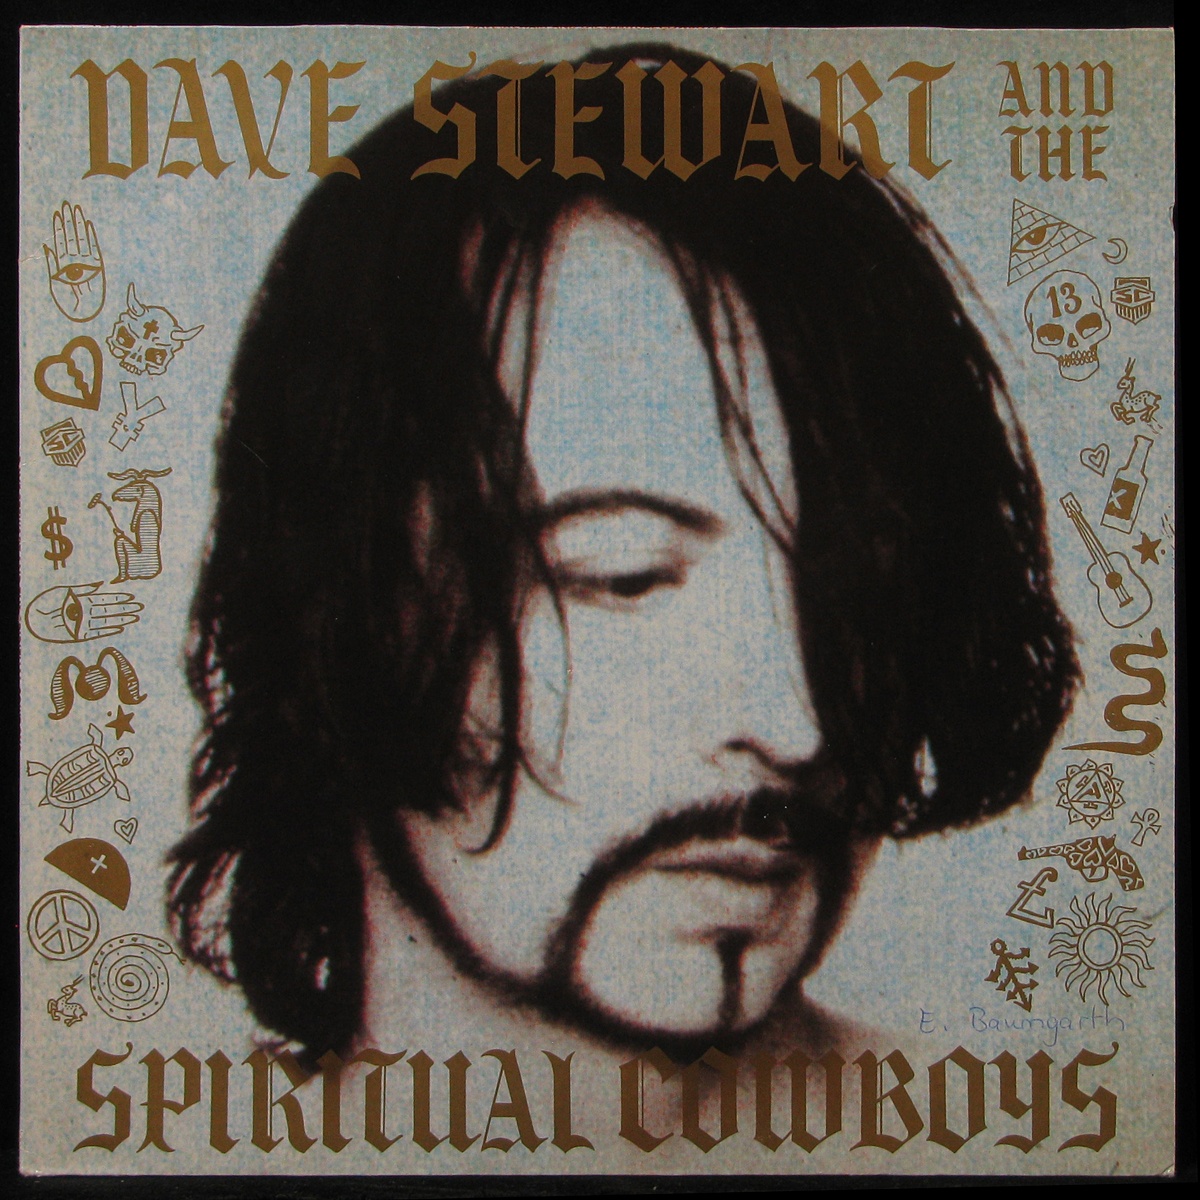 LP Dave Stewart And The Spiritual Cowboys — Dave Stewart And The Spiritual Cowboys (1990) фото